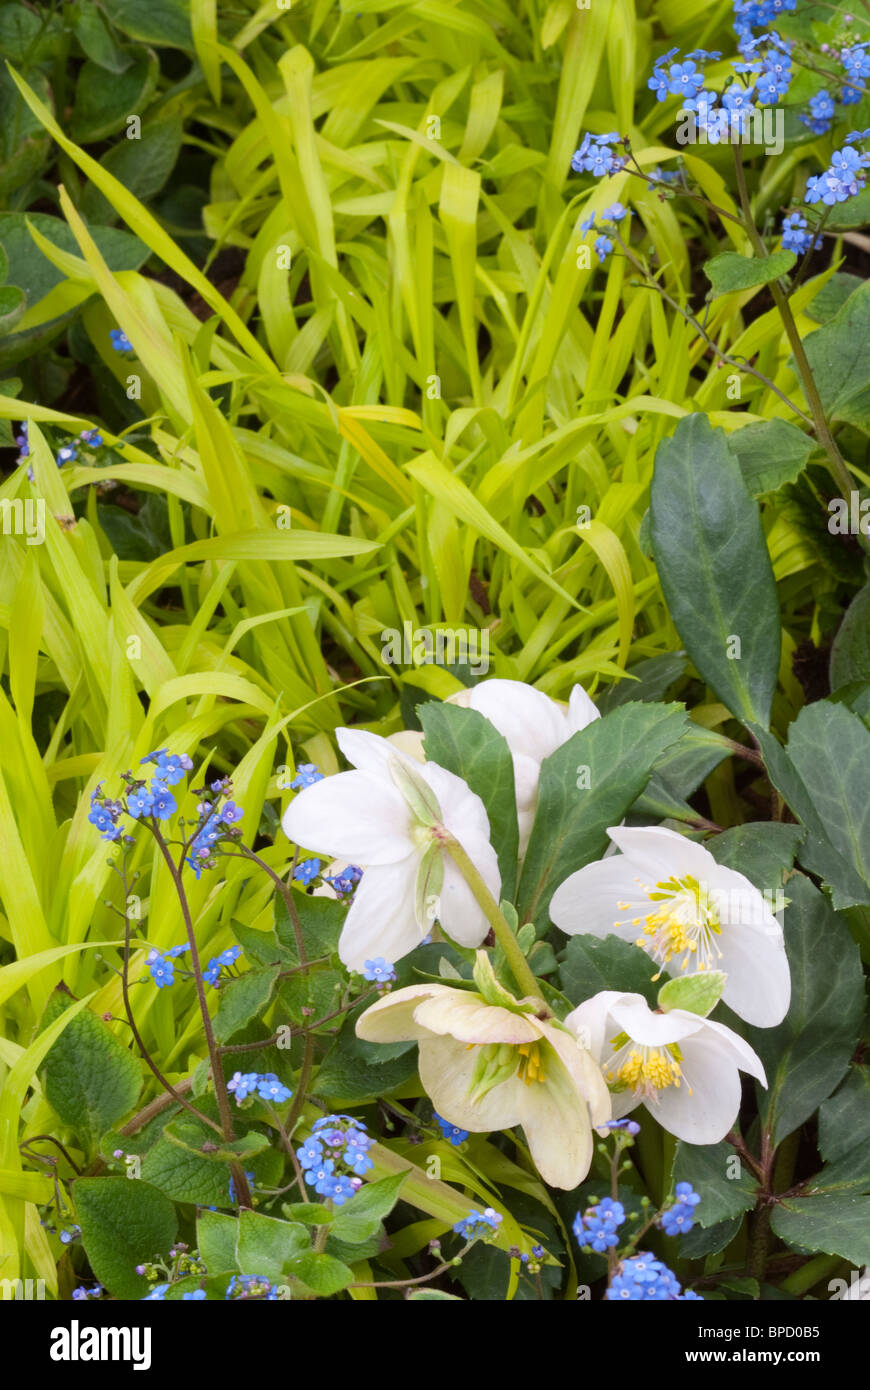 Blue & gold spring garden scene with white hellebore flowers, blue brunnera false forget-me-nots, yellow hakon grass Stock Photo